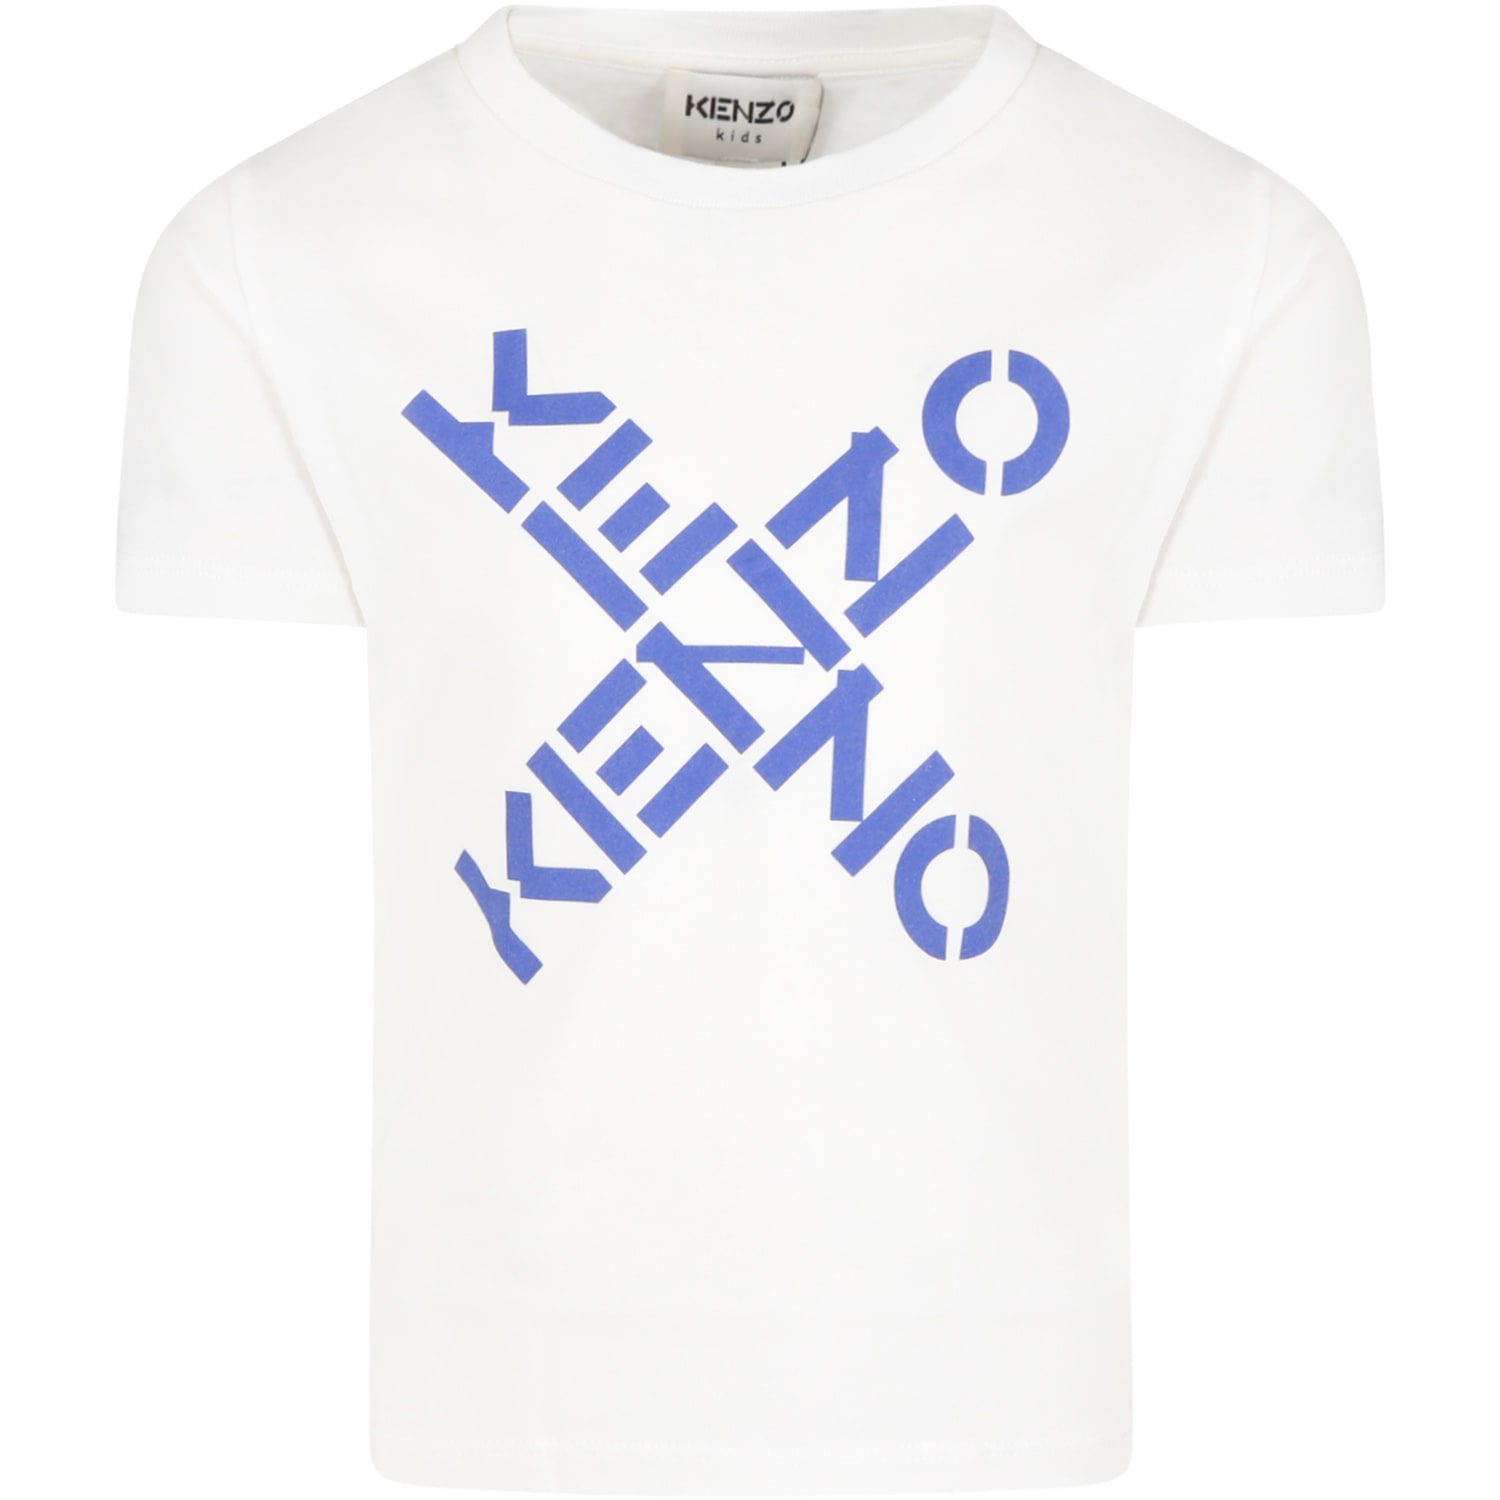 Kenzo Kids White T-shirt For Kids With Logos